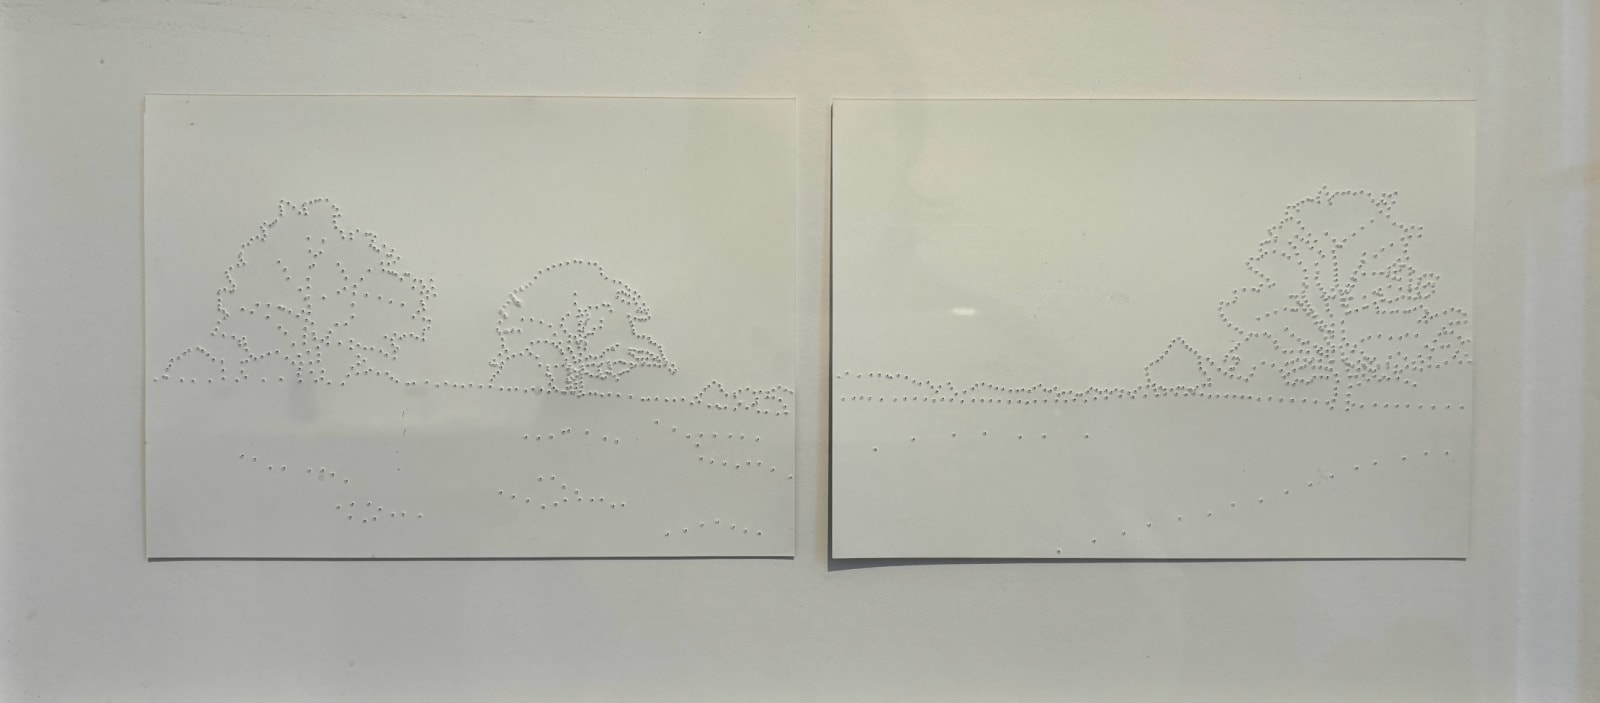 Aliki Braine, Blind Landscape, 2004